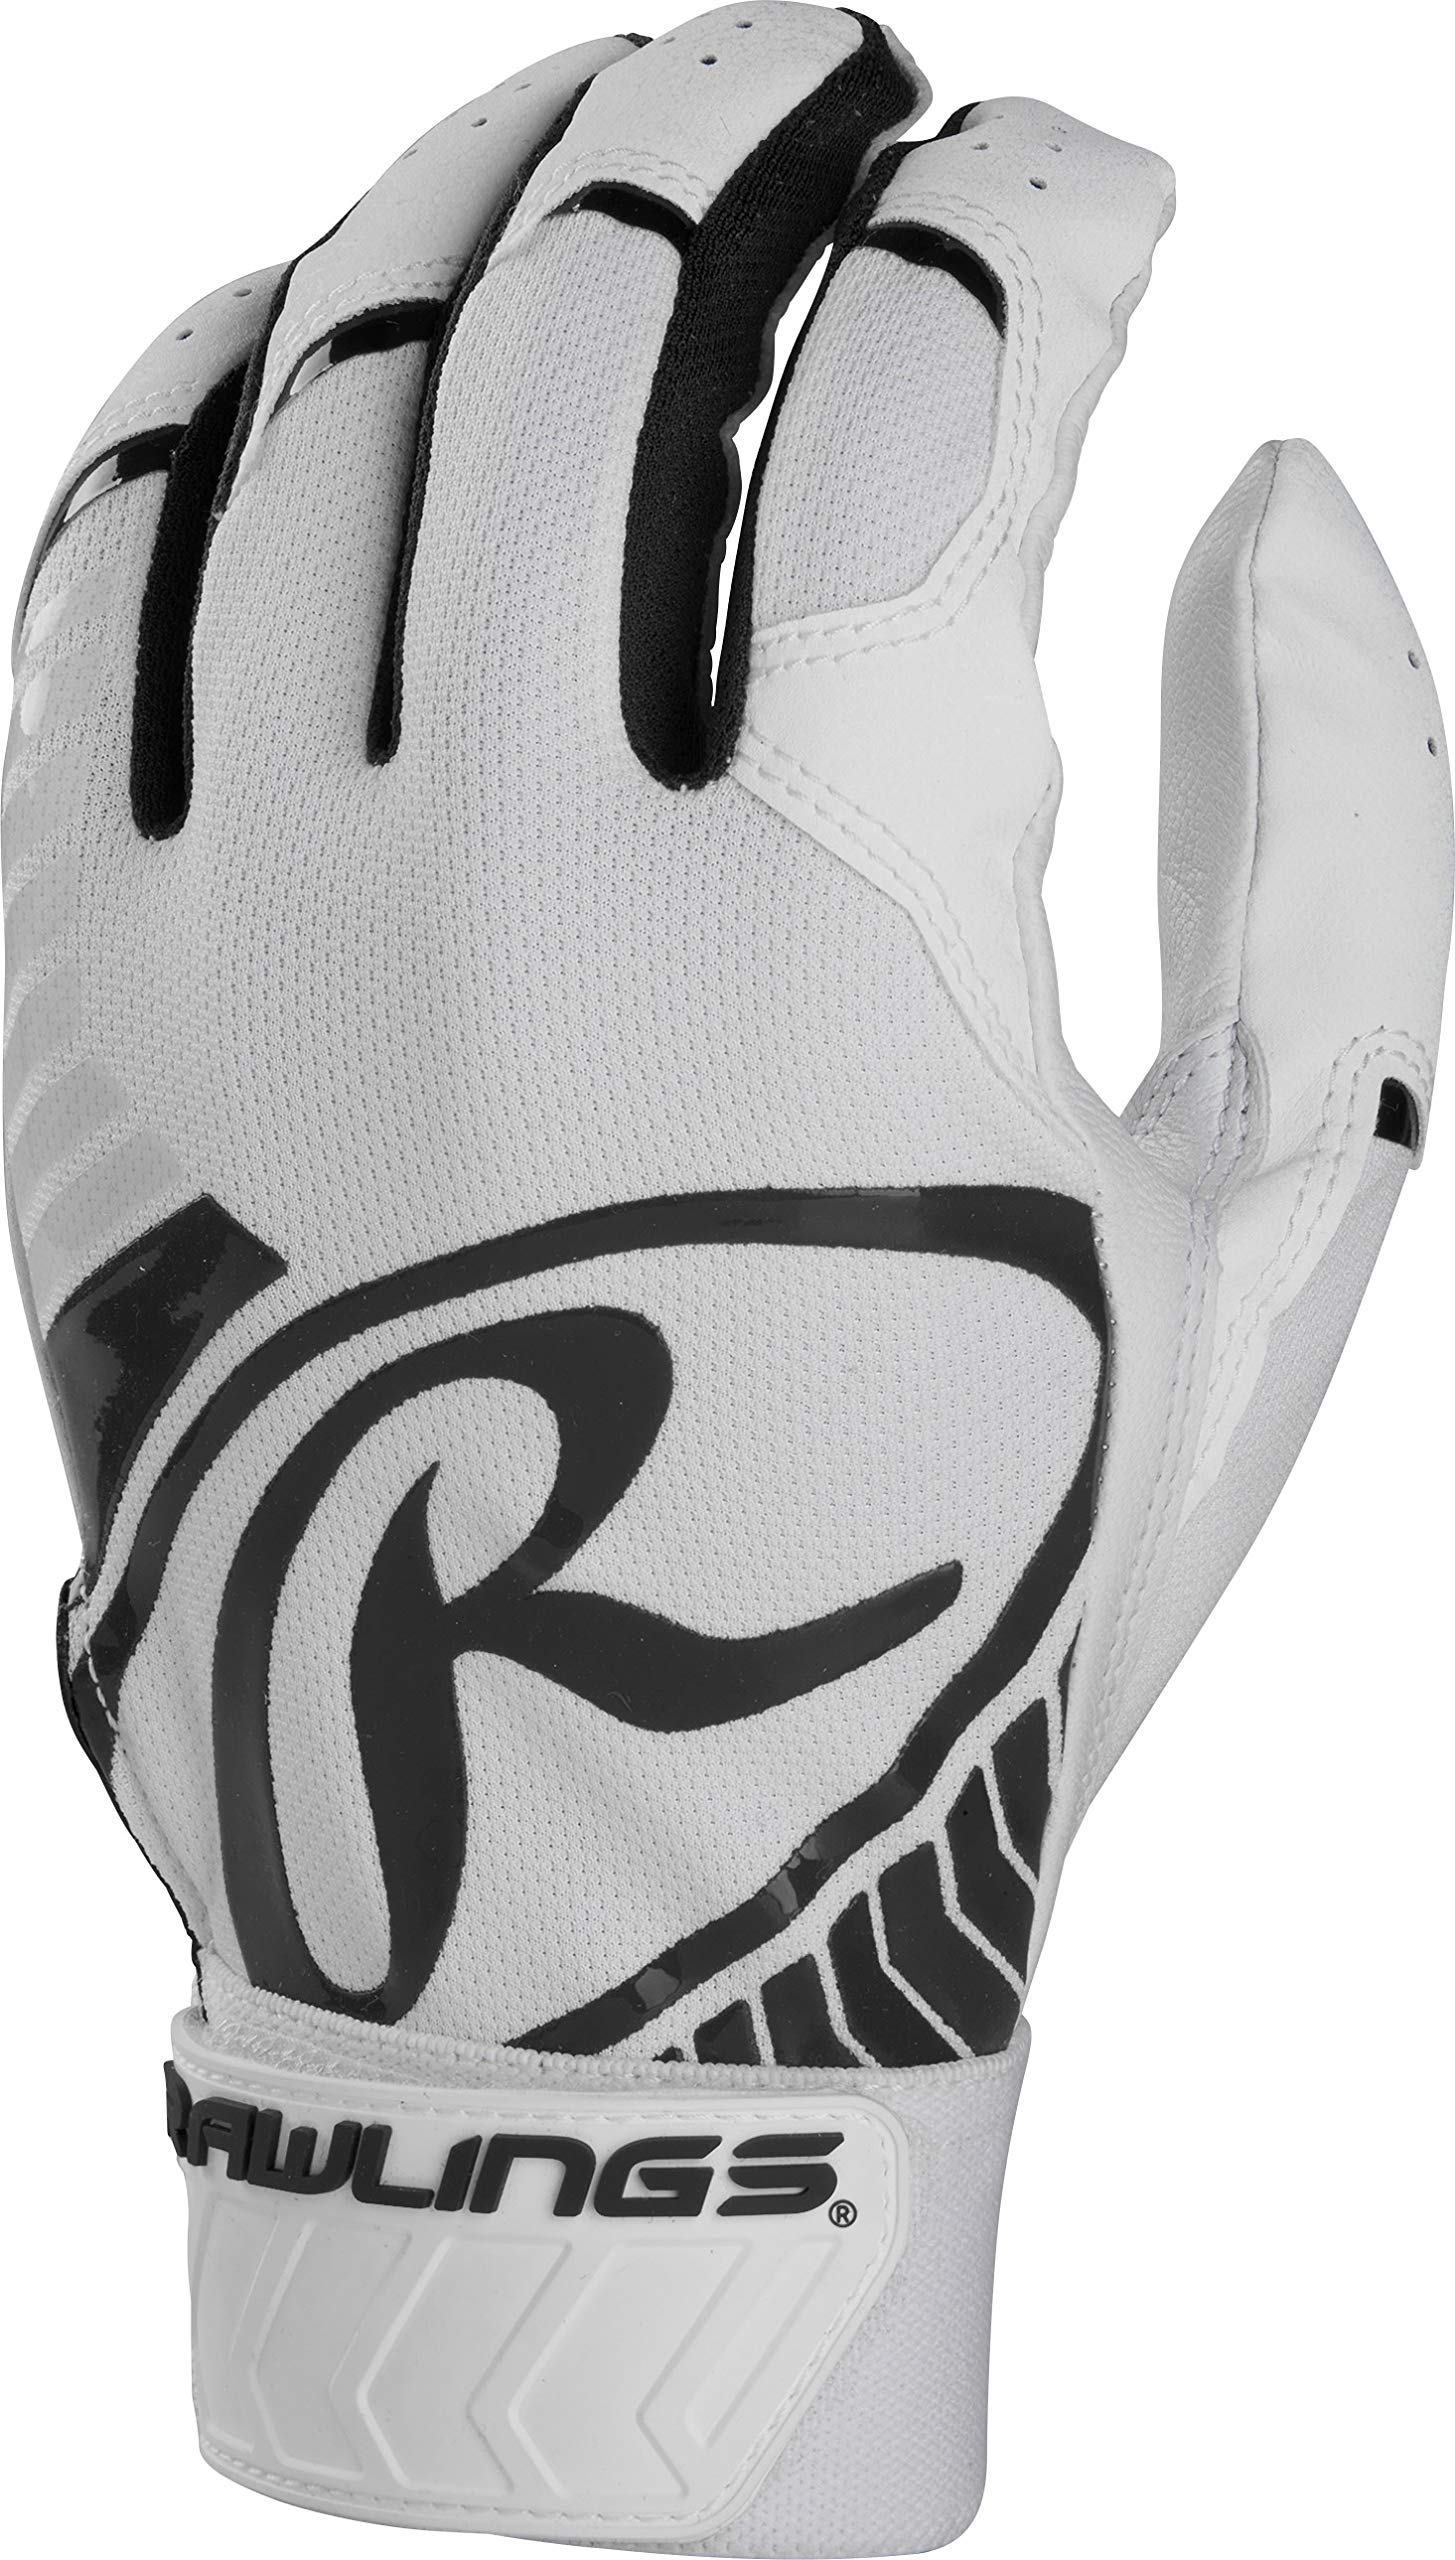 Rawlings 5150 Adult Baseball Batting Gloves, Adult Large, Black